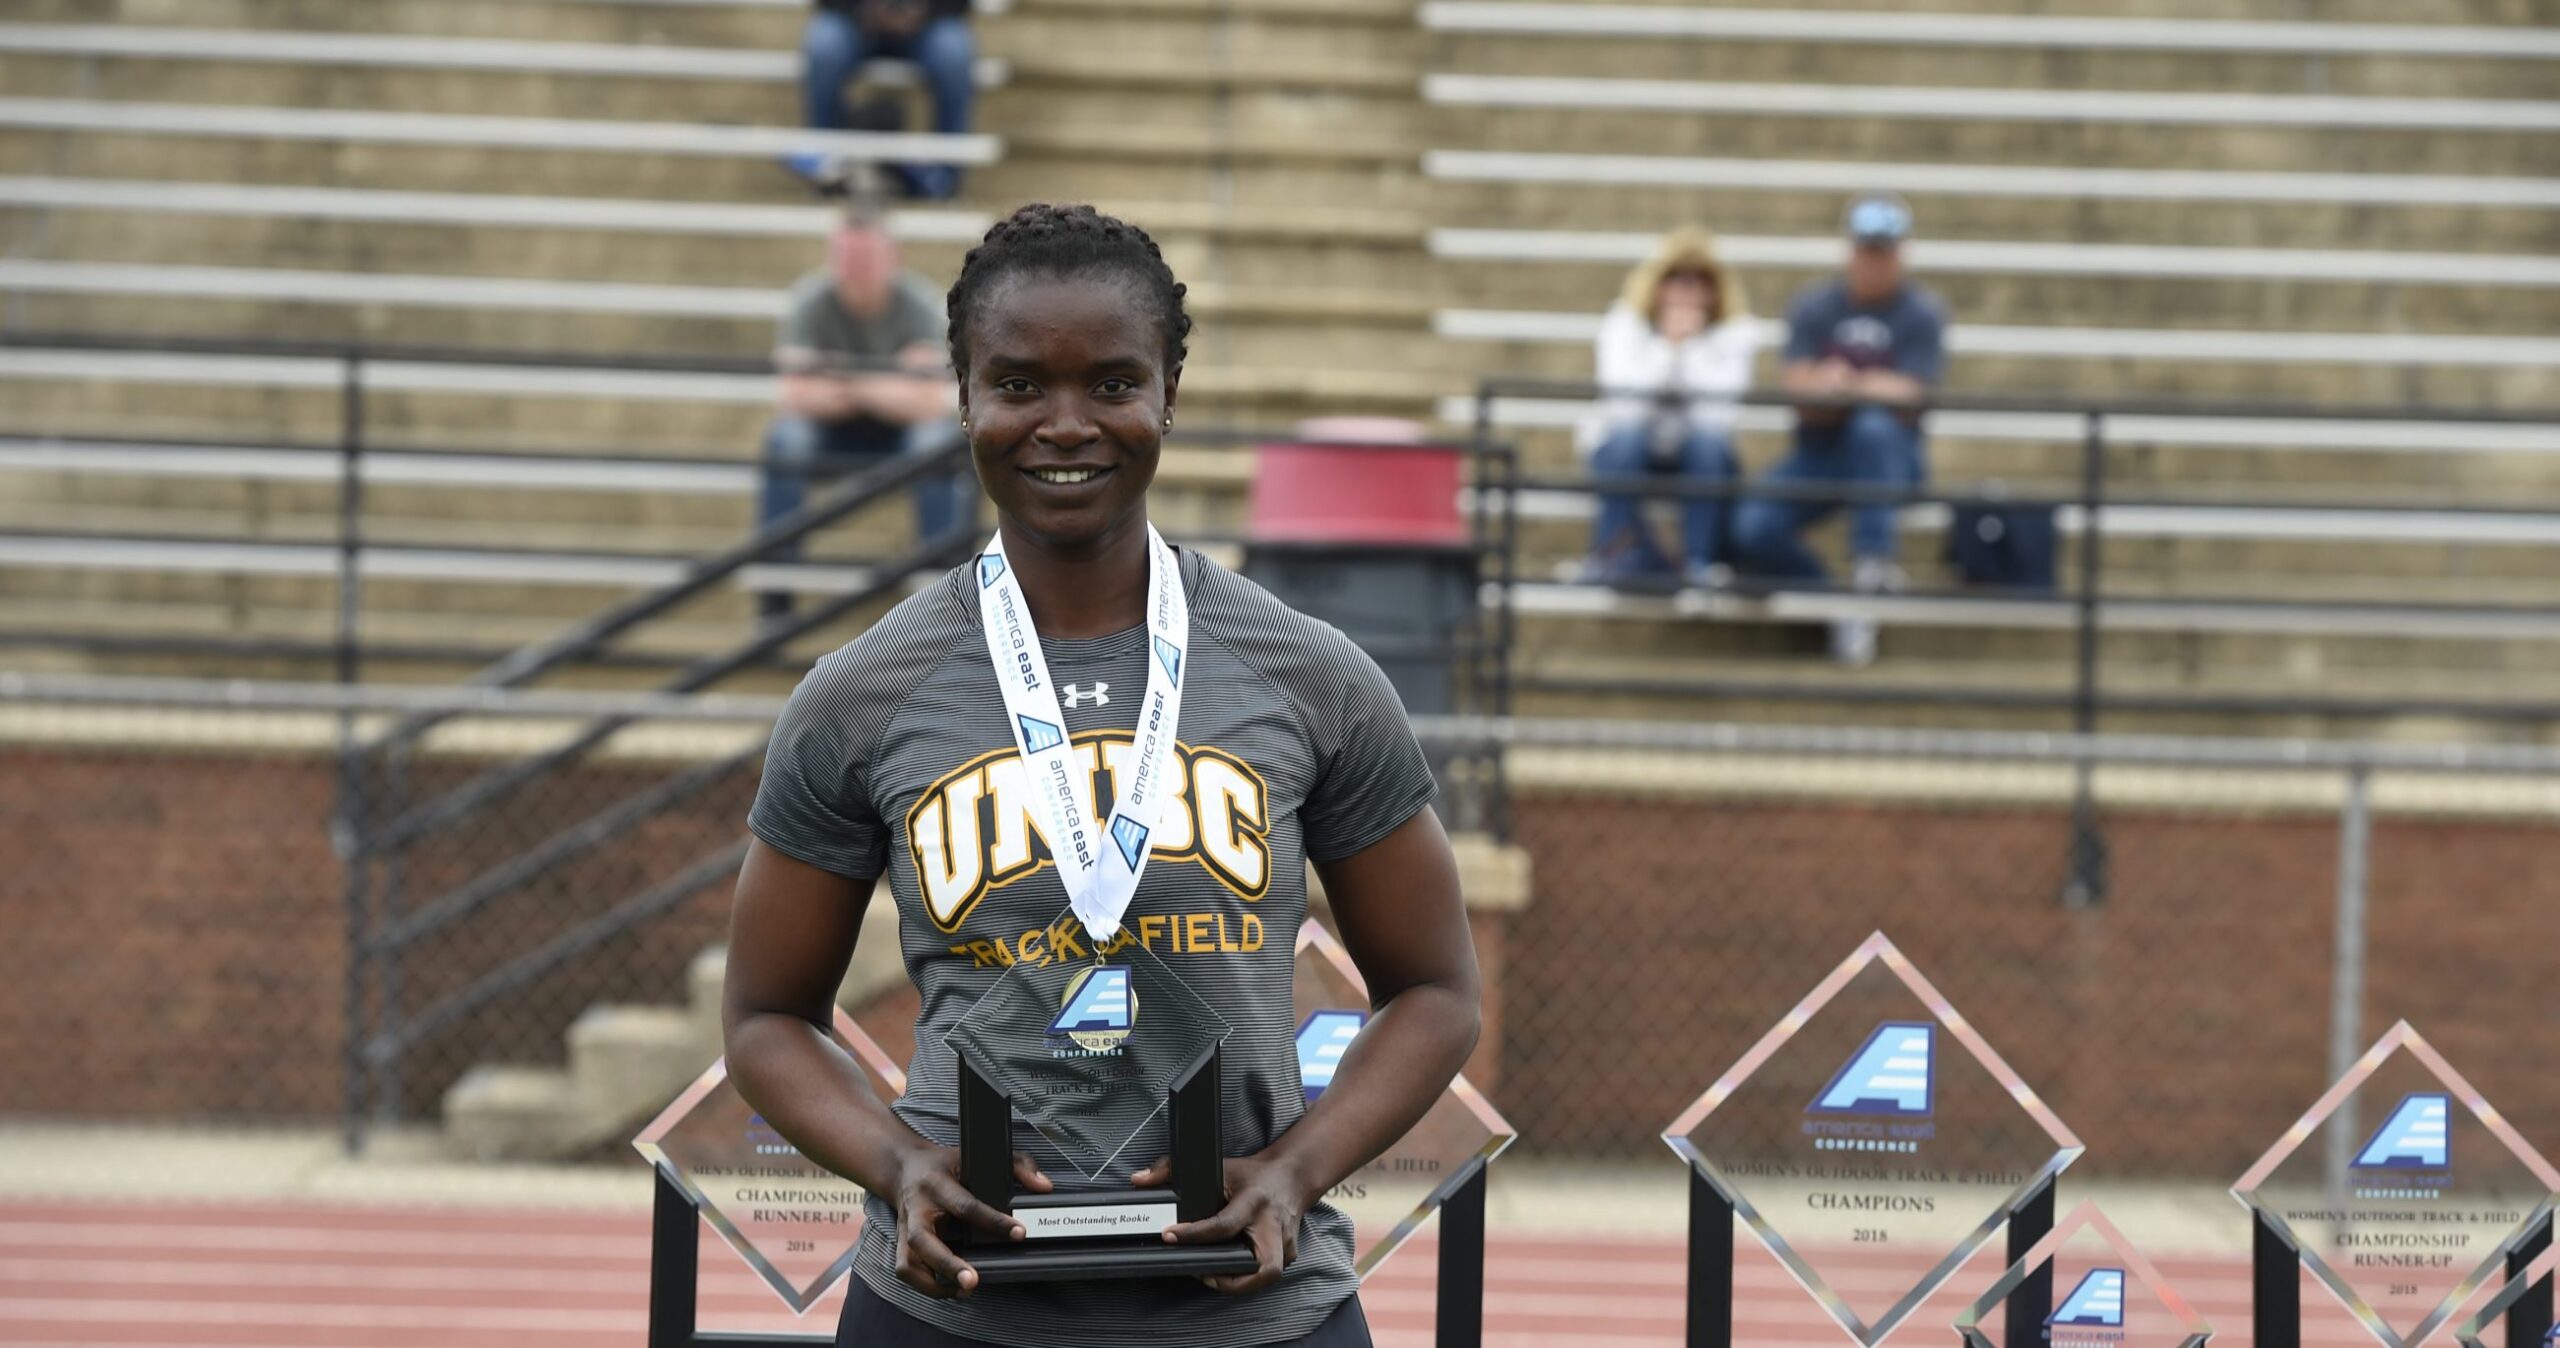 Kelechi Nwanaga after winning 4th at NCAA Track and Field Championships. Photo by Gail Burton